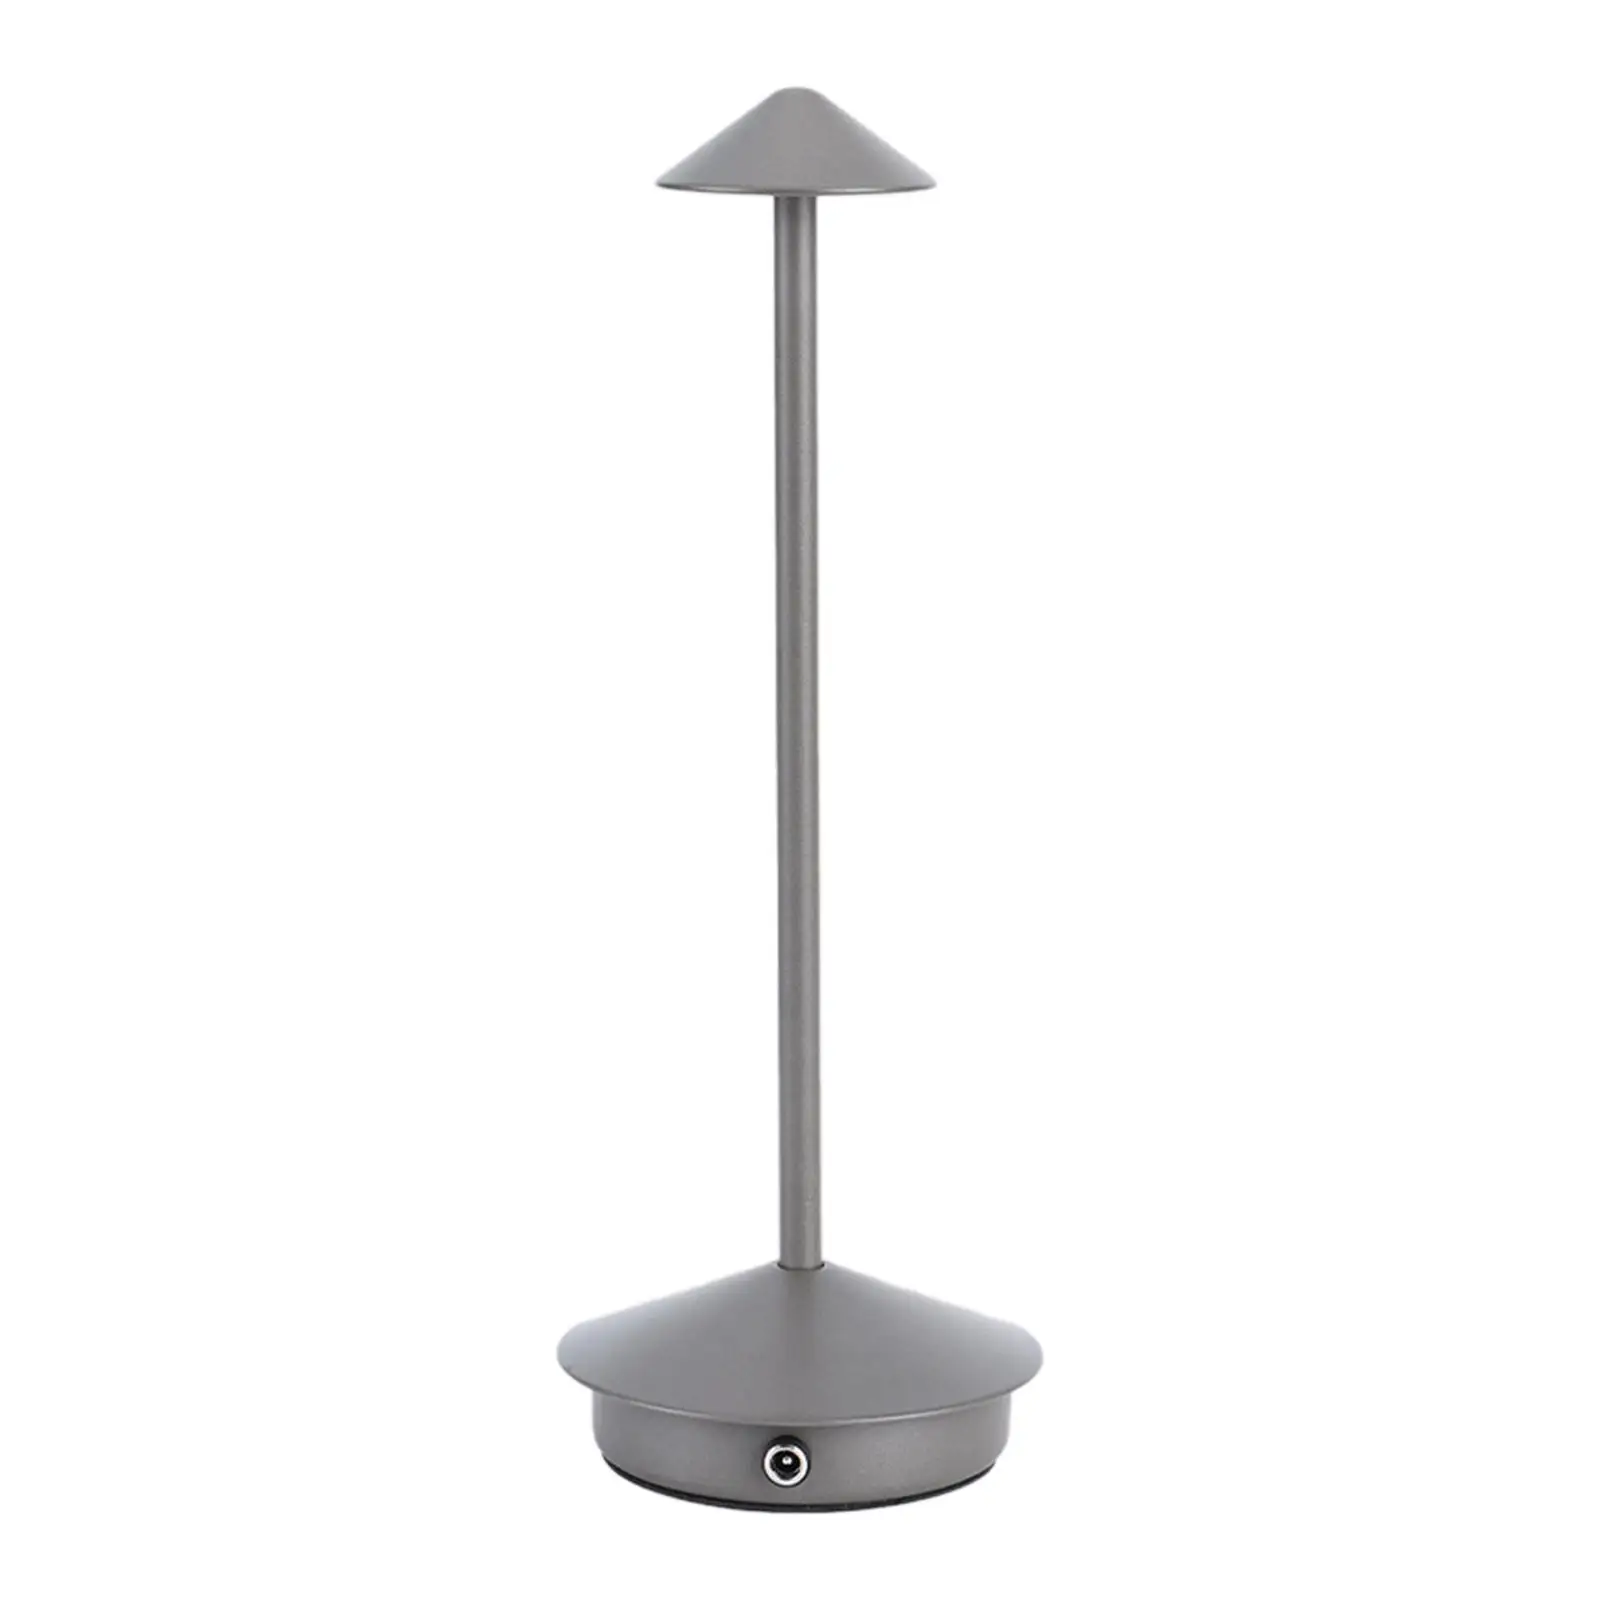 Bedside Table Lamp Dimming LED Nightlight 3 Mode Brightness Living Room USB